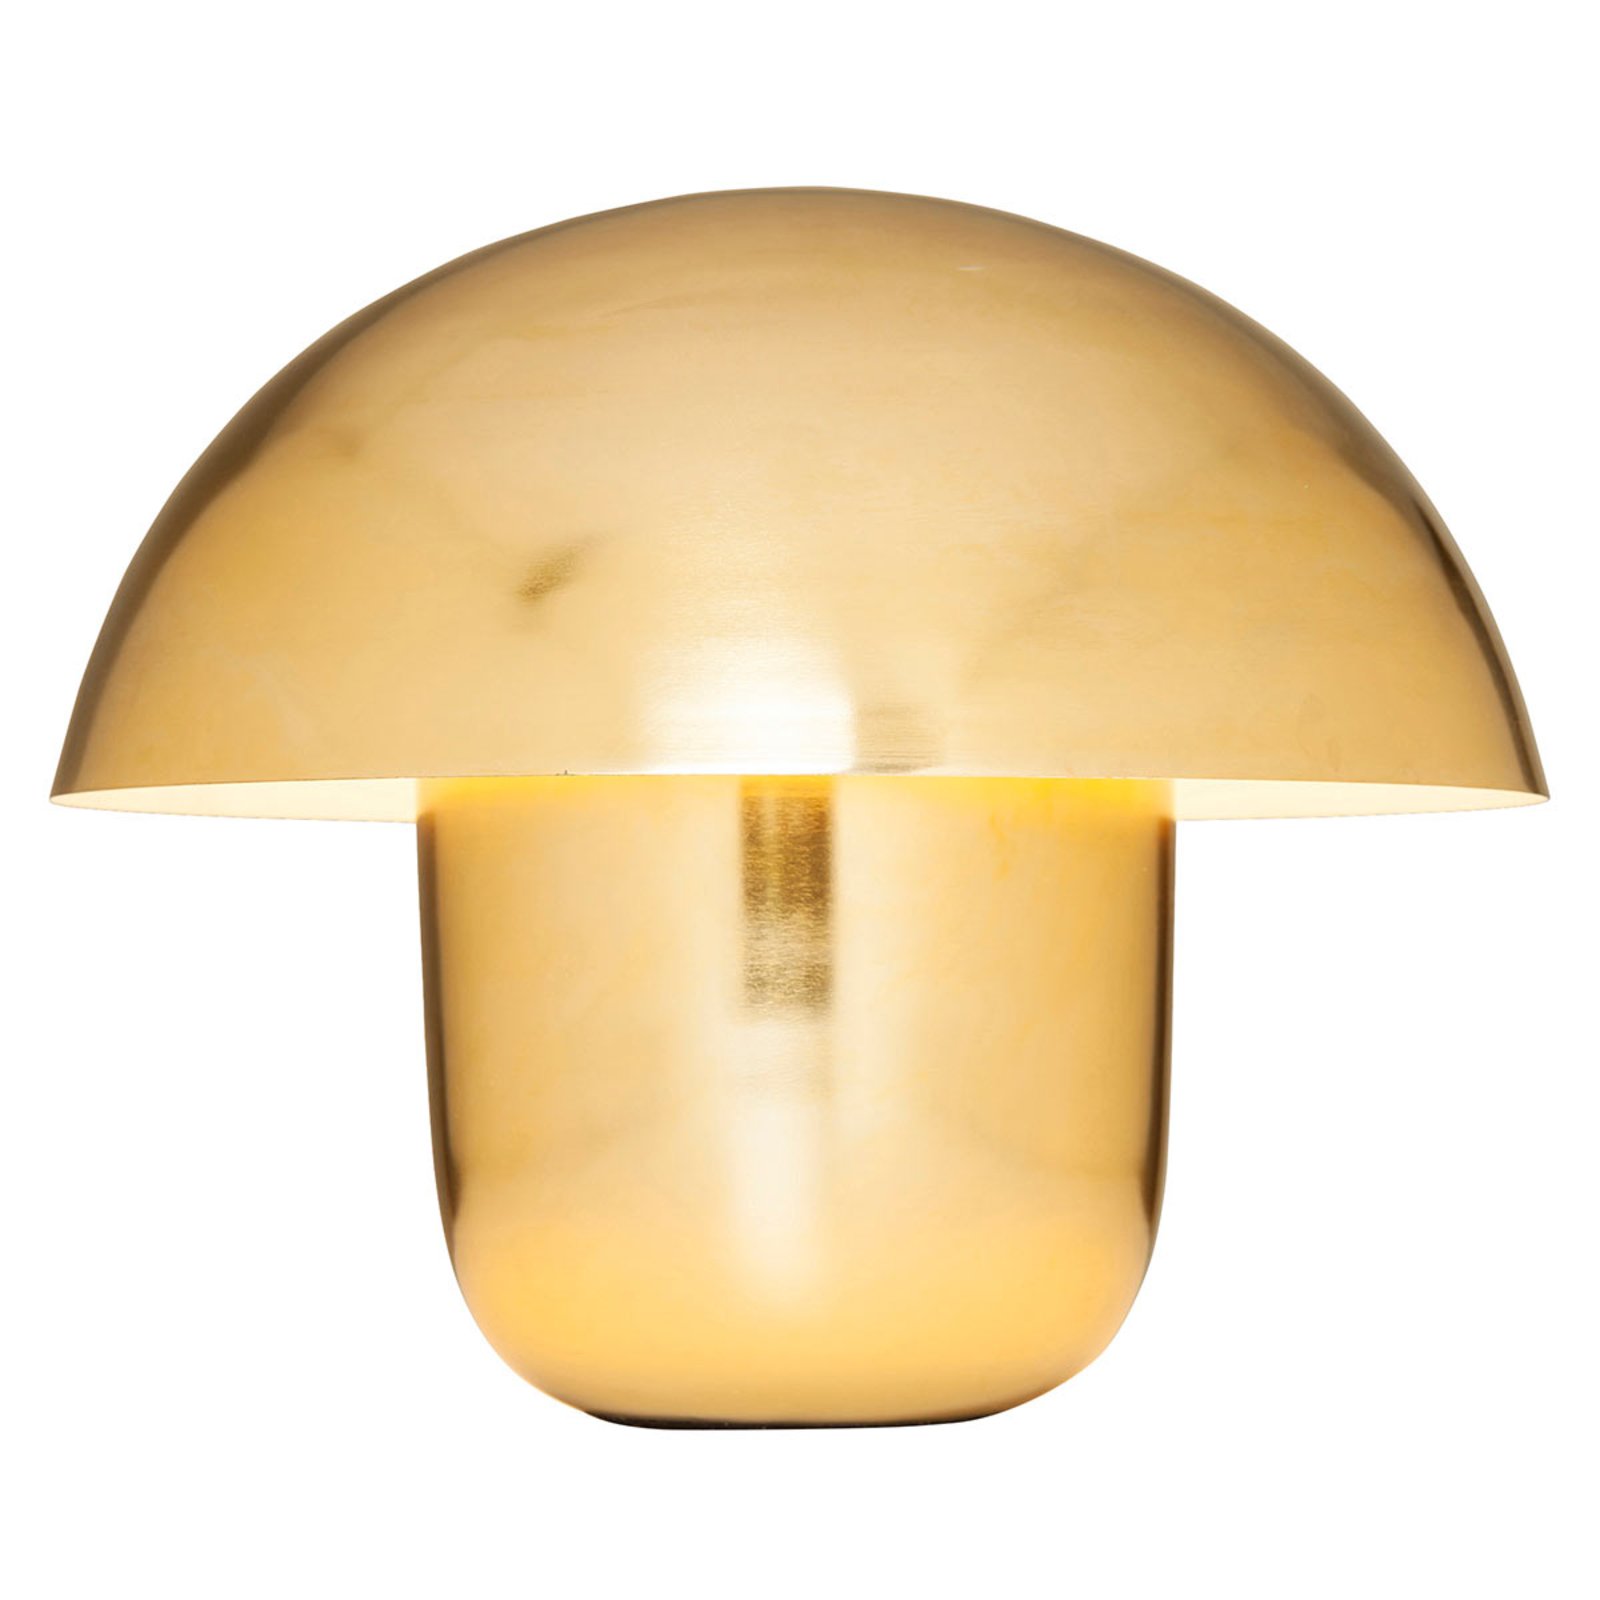 KAREN Mushroom - Table lamp in the shape of a mushroom, gold